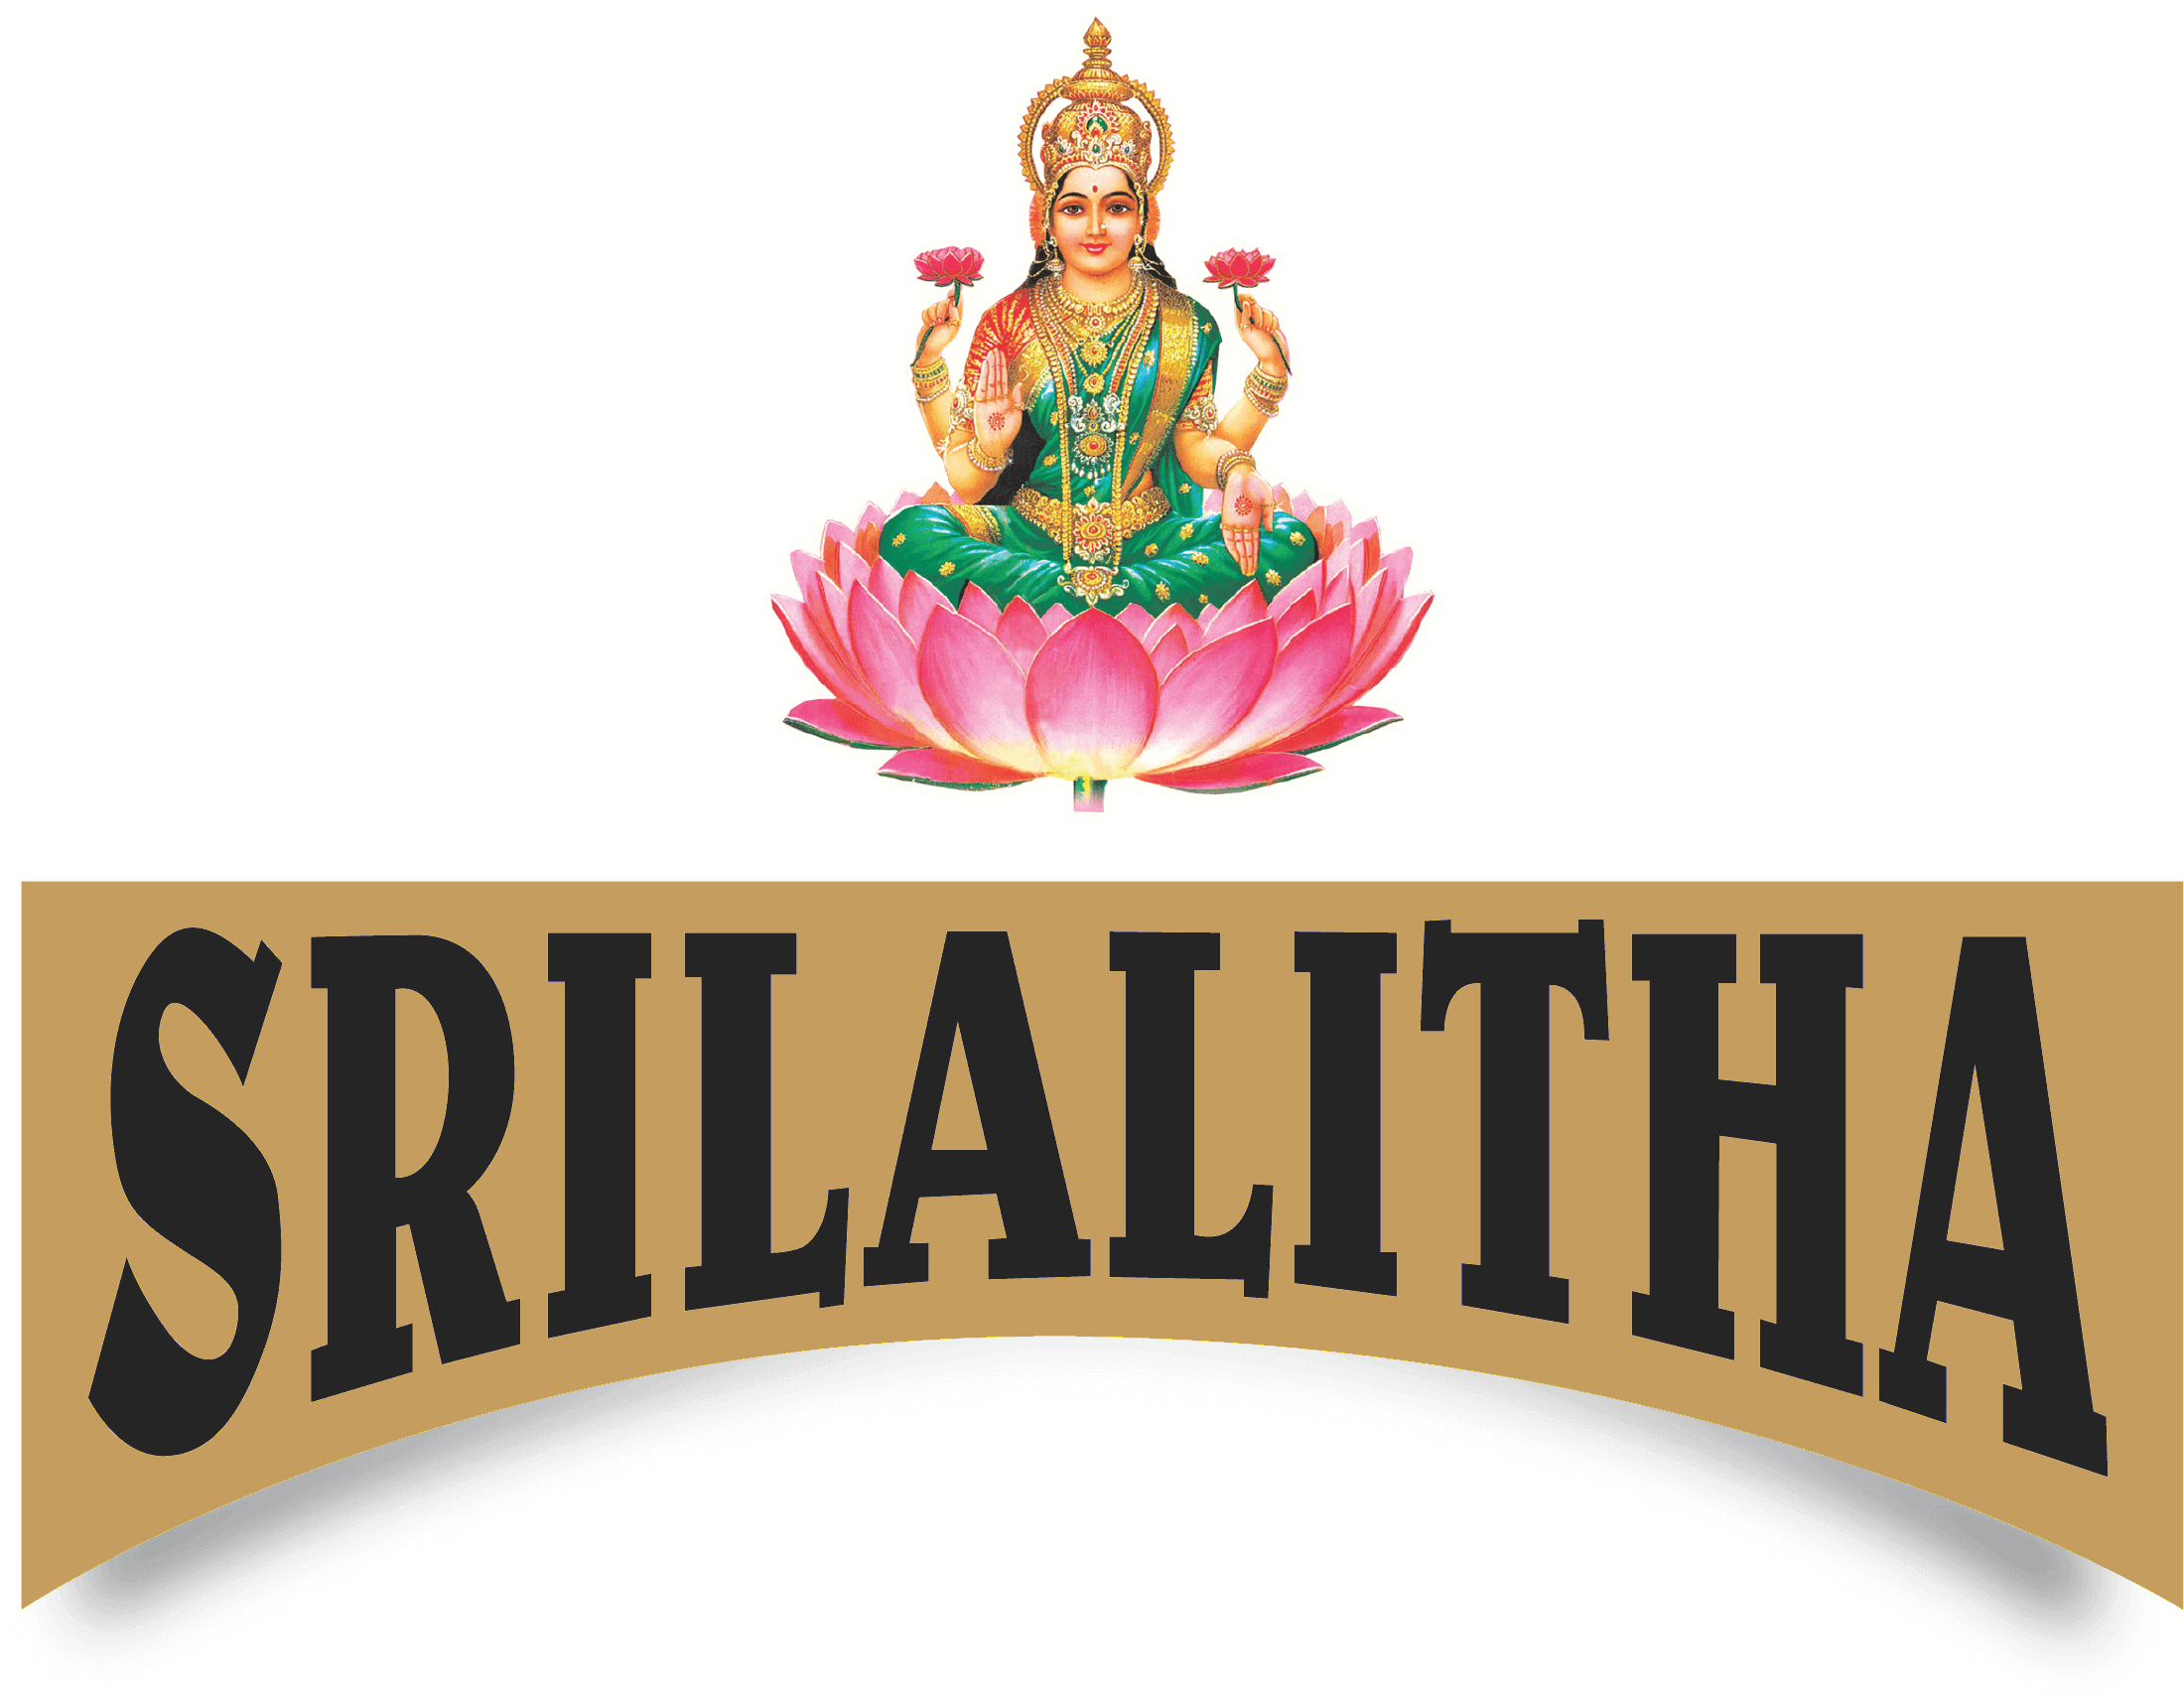 Sri Lalitha Enterprises